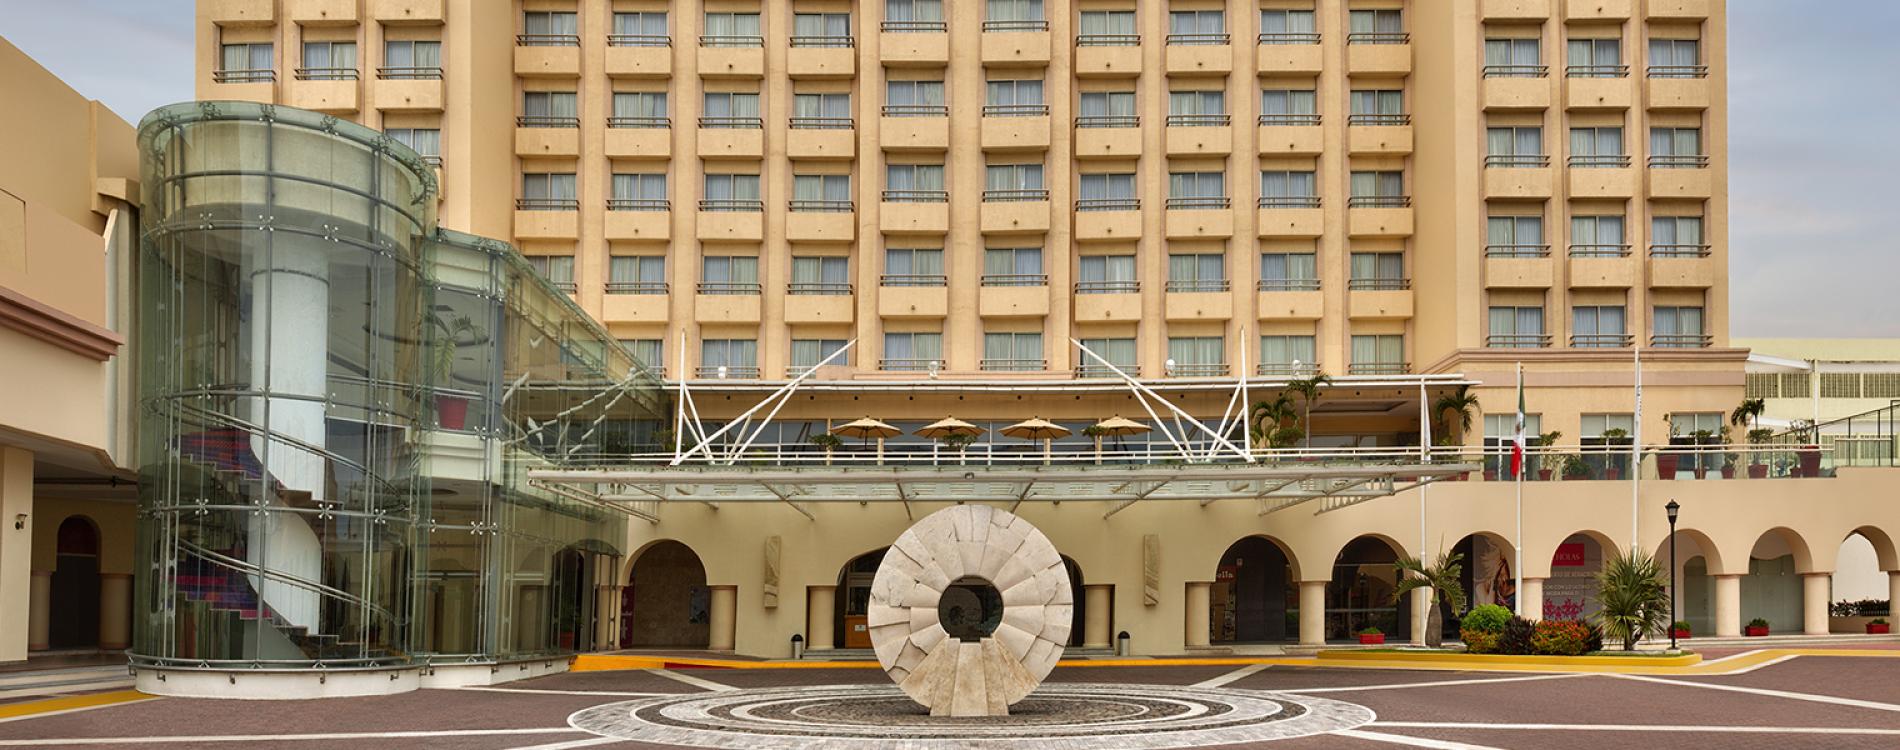 Galeria Plaza Veracruz, in Veracruz / Boca del Rio, Mexico - Preferred  Hotels & Resorts